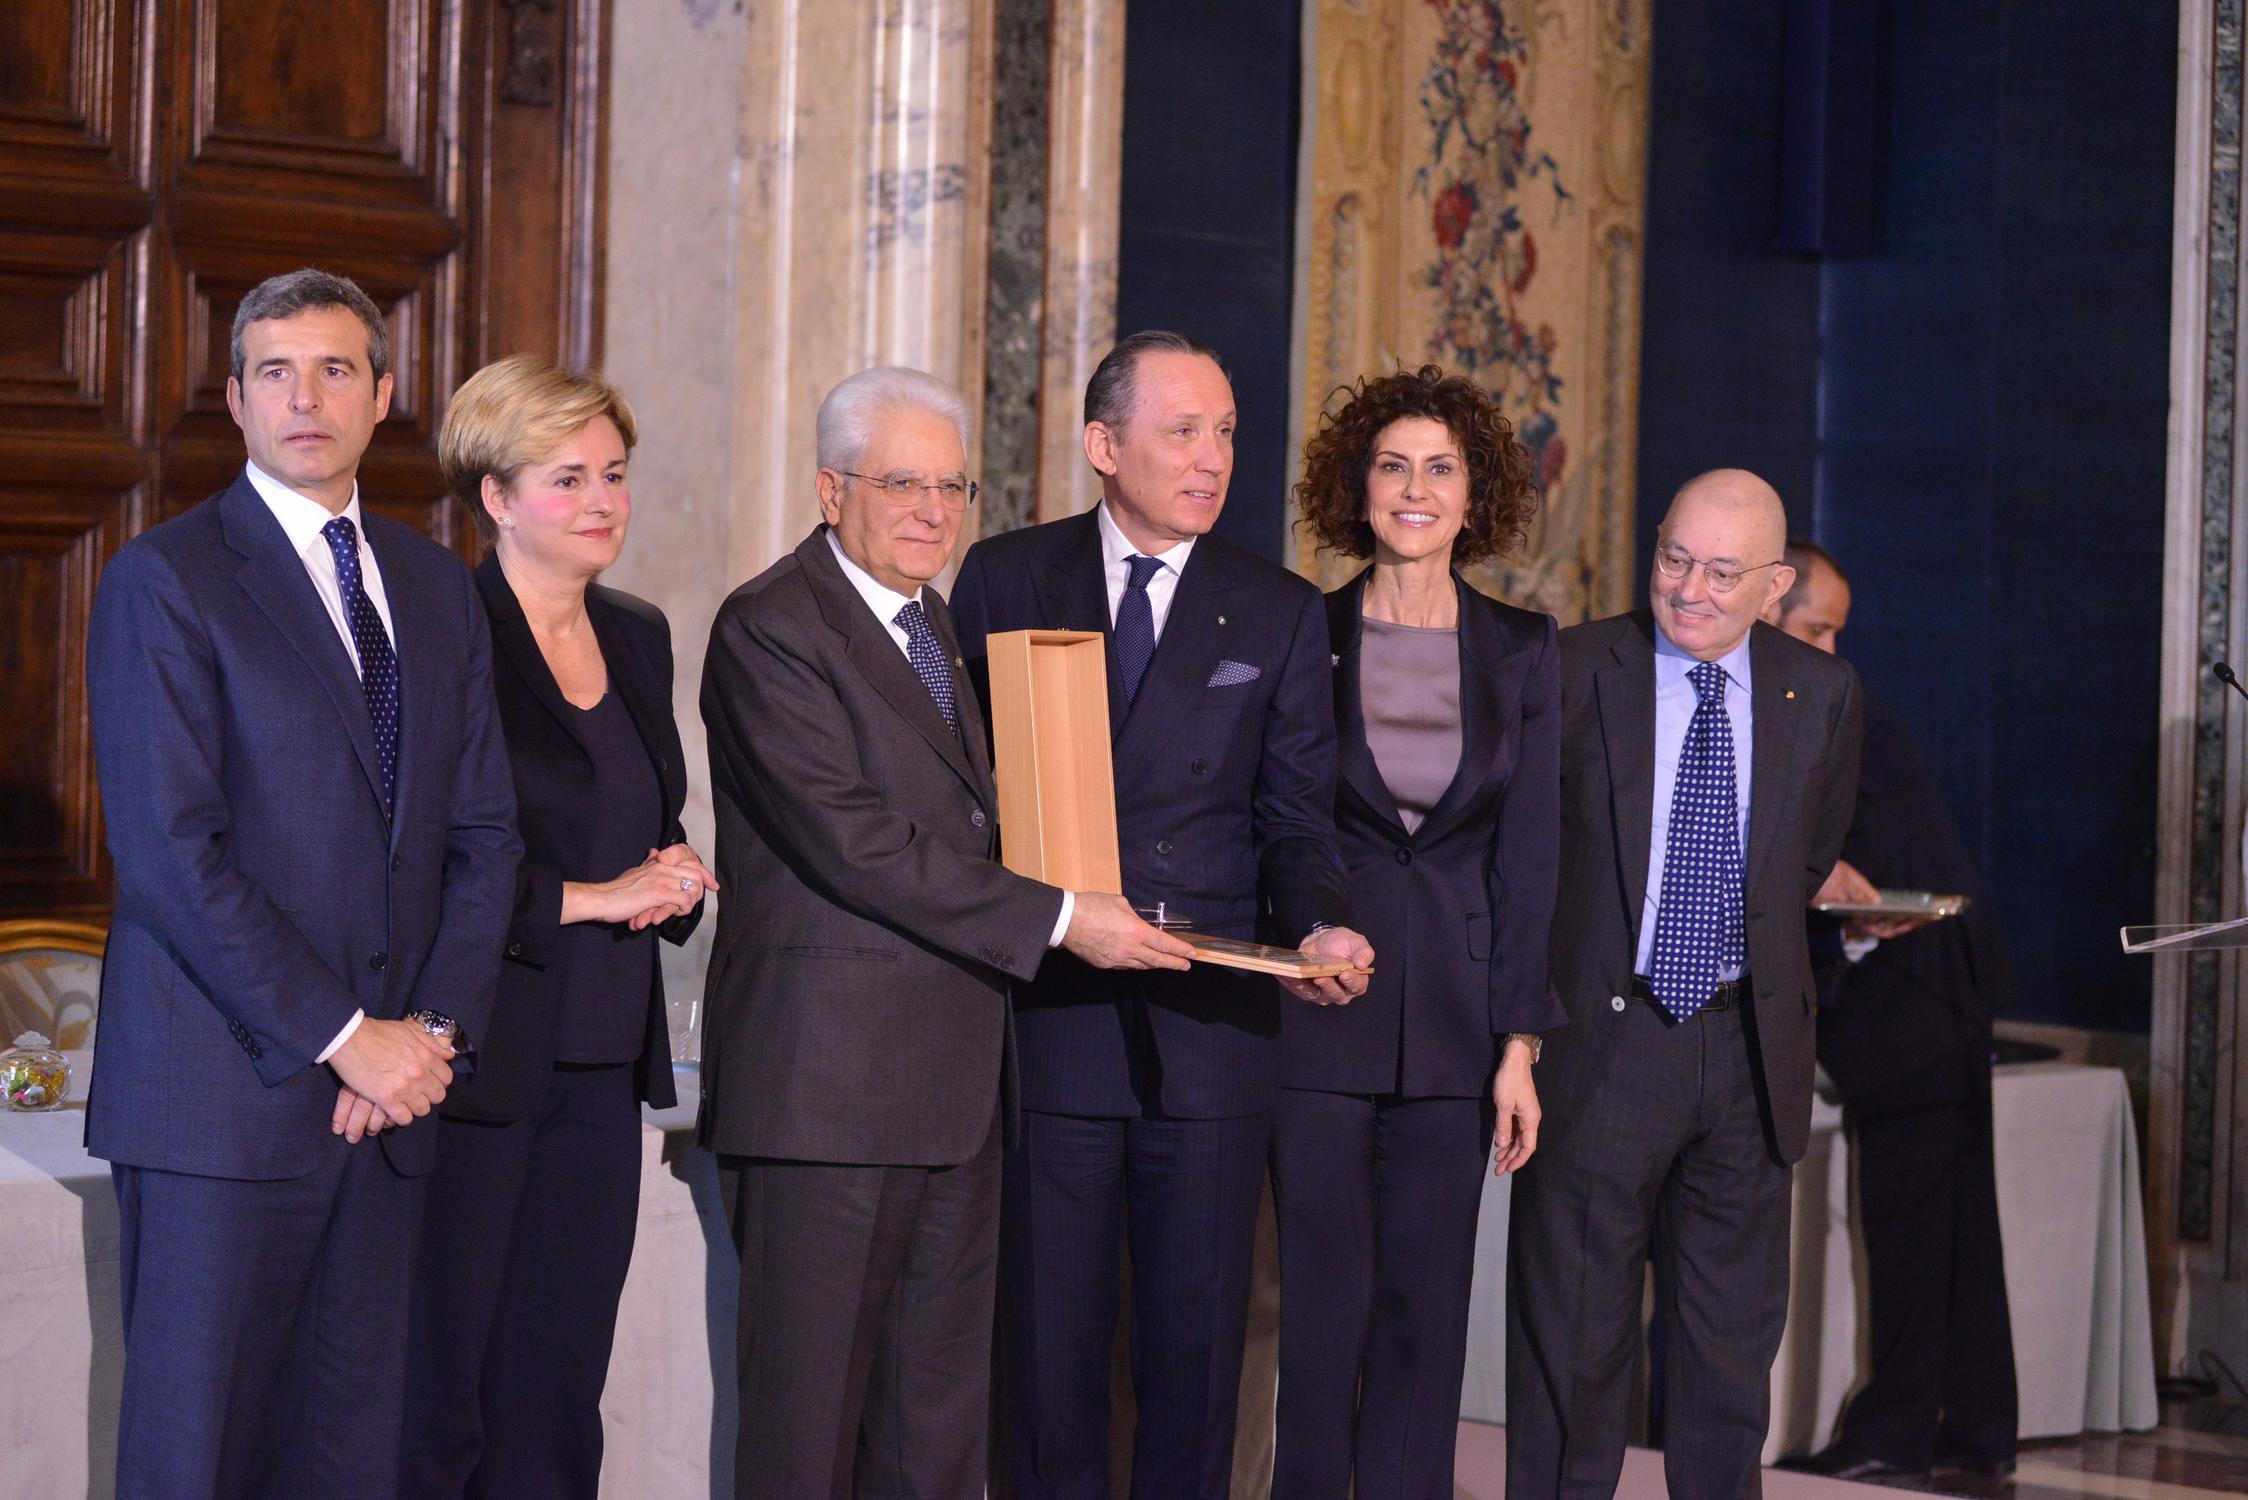 Premio Leonardo 2015: il prestigioso riconoscimento a Gildo Zegna